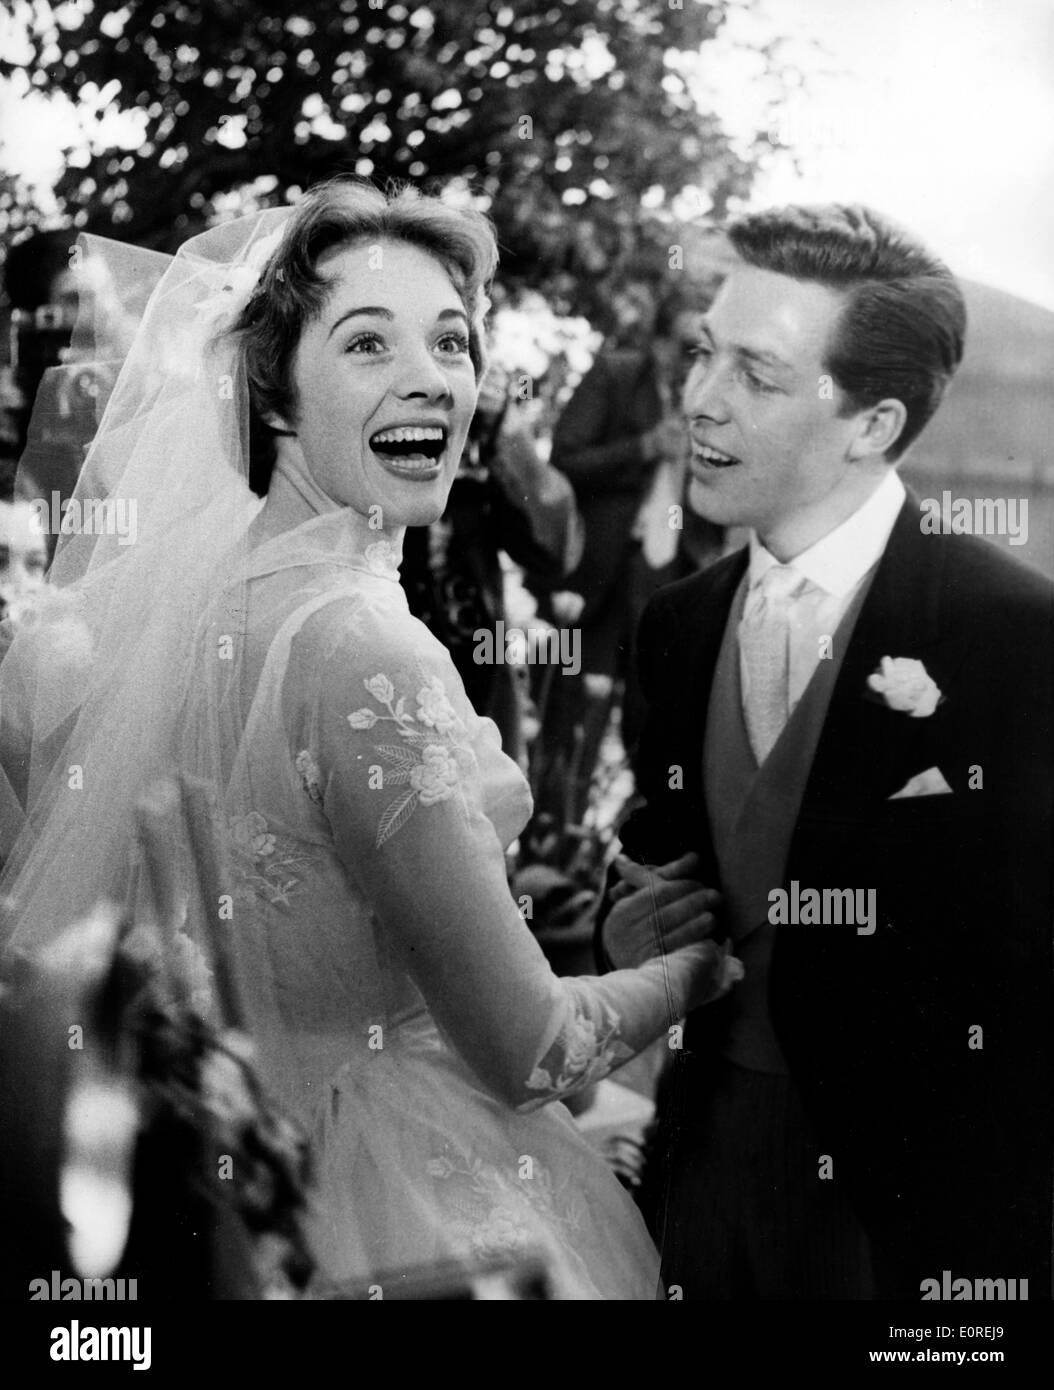 The wedding of actress Julie Andrews and Tony Walton Stock Photo